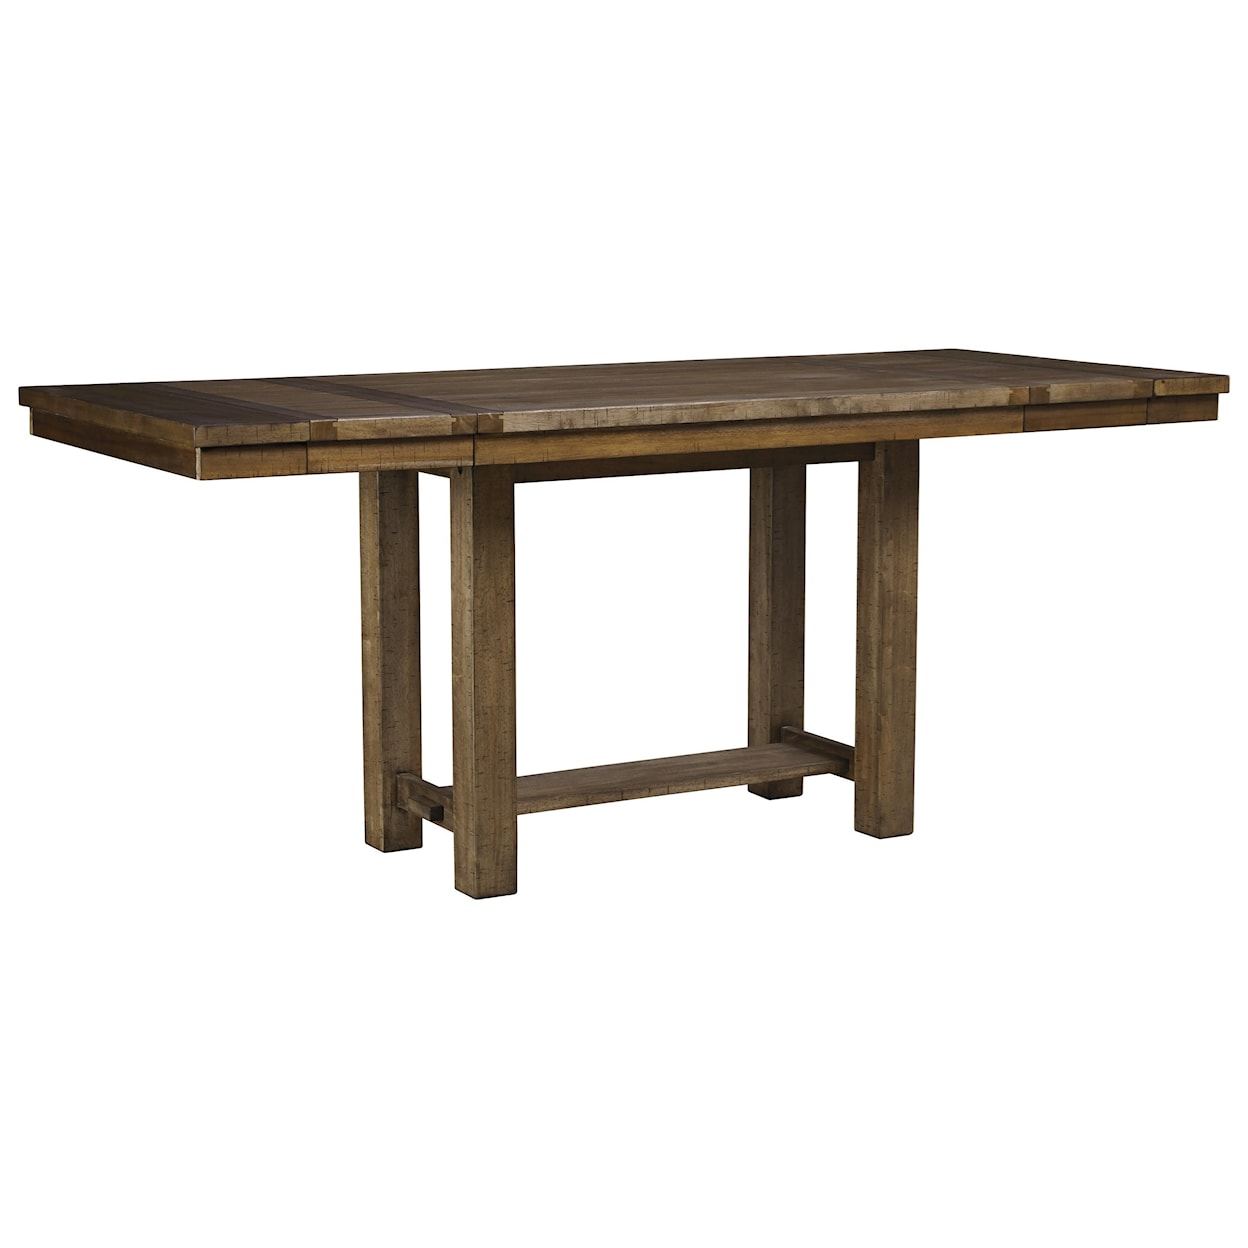 Benchcraft Moriville 5-Piece Rectangular Ext Counter Table Set